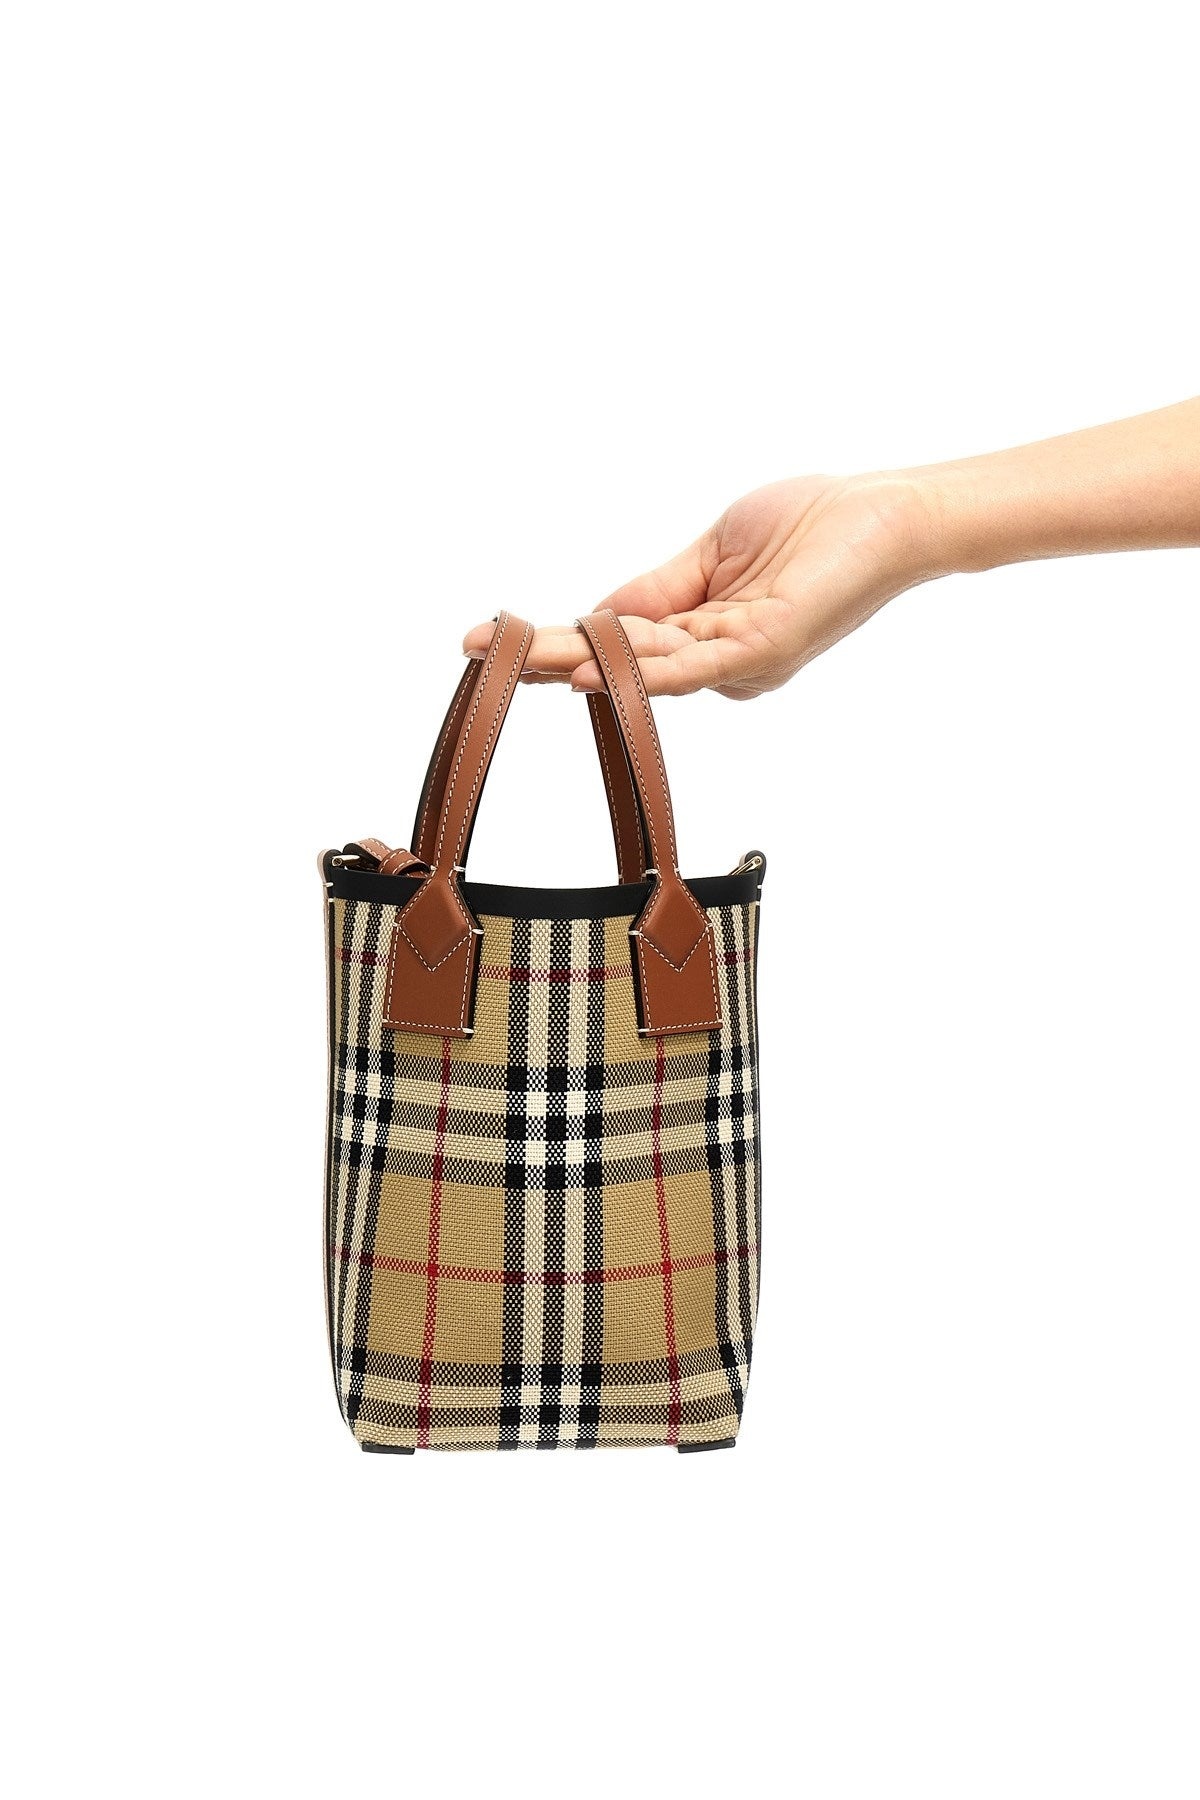 Burberry Women 'London Mini' Shopping Bag - 2